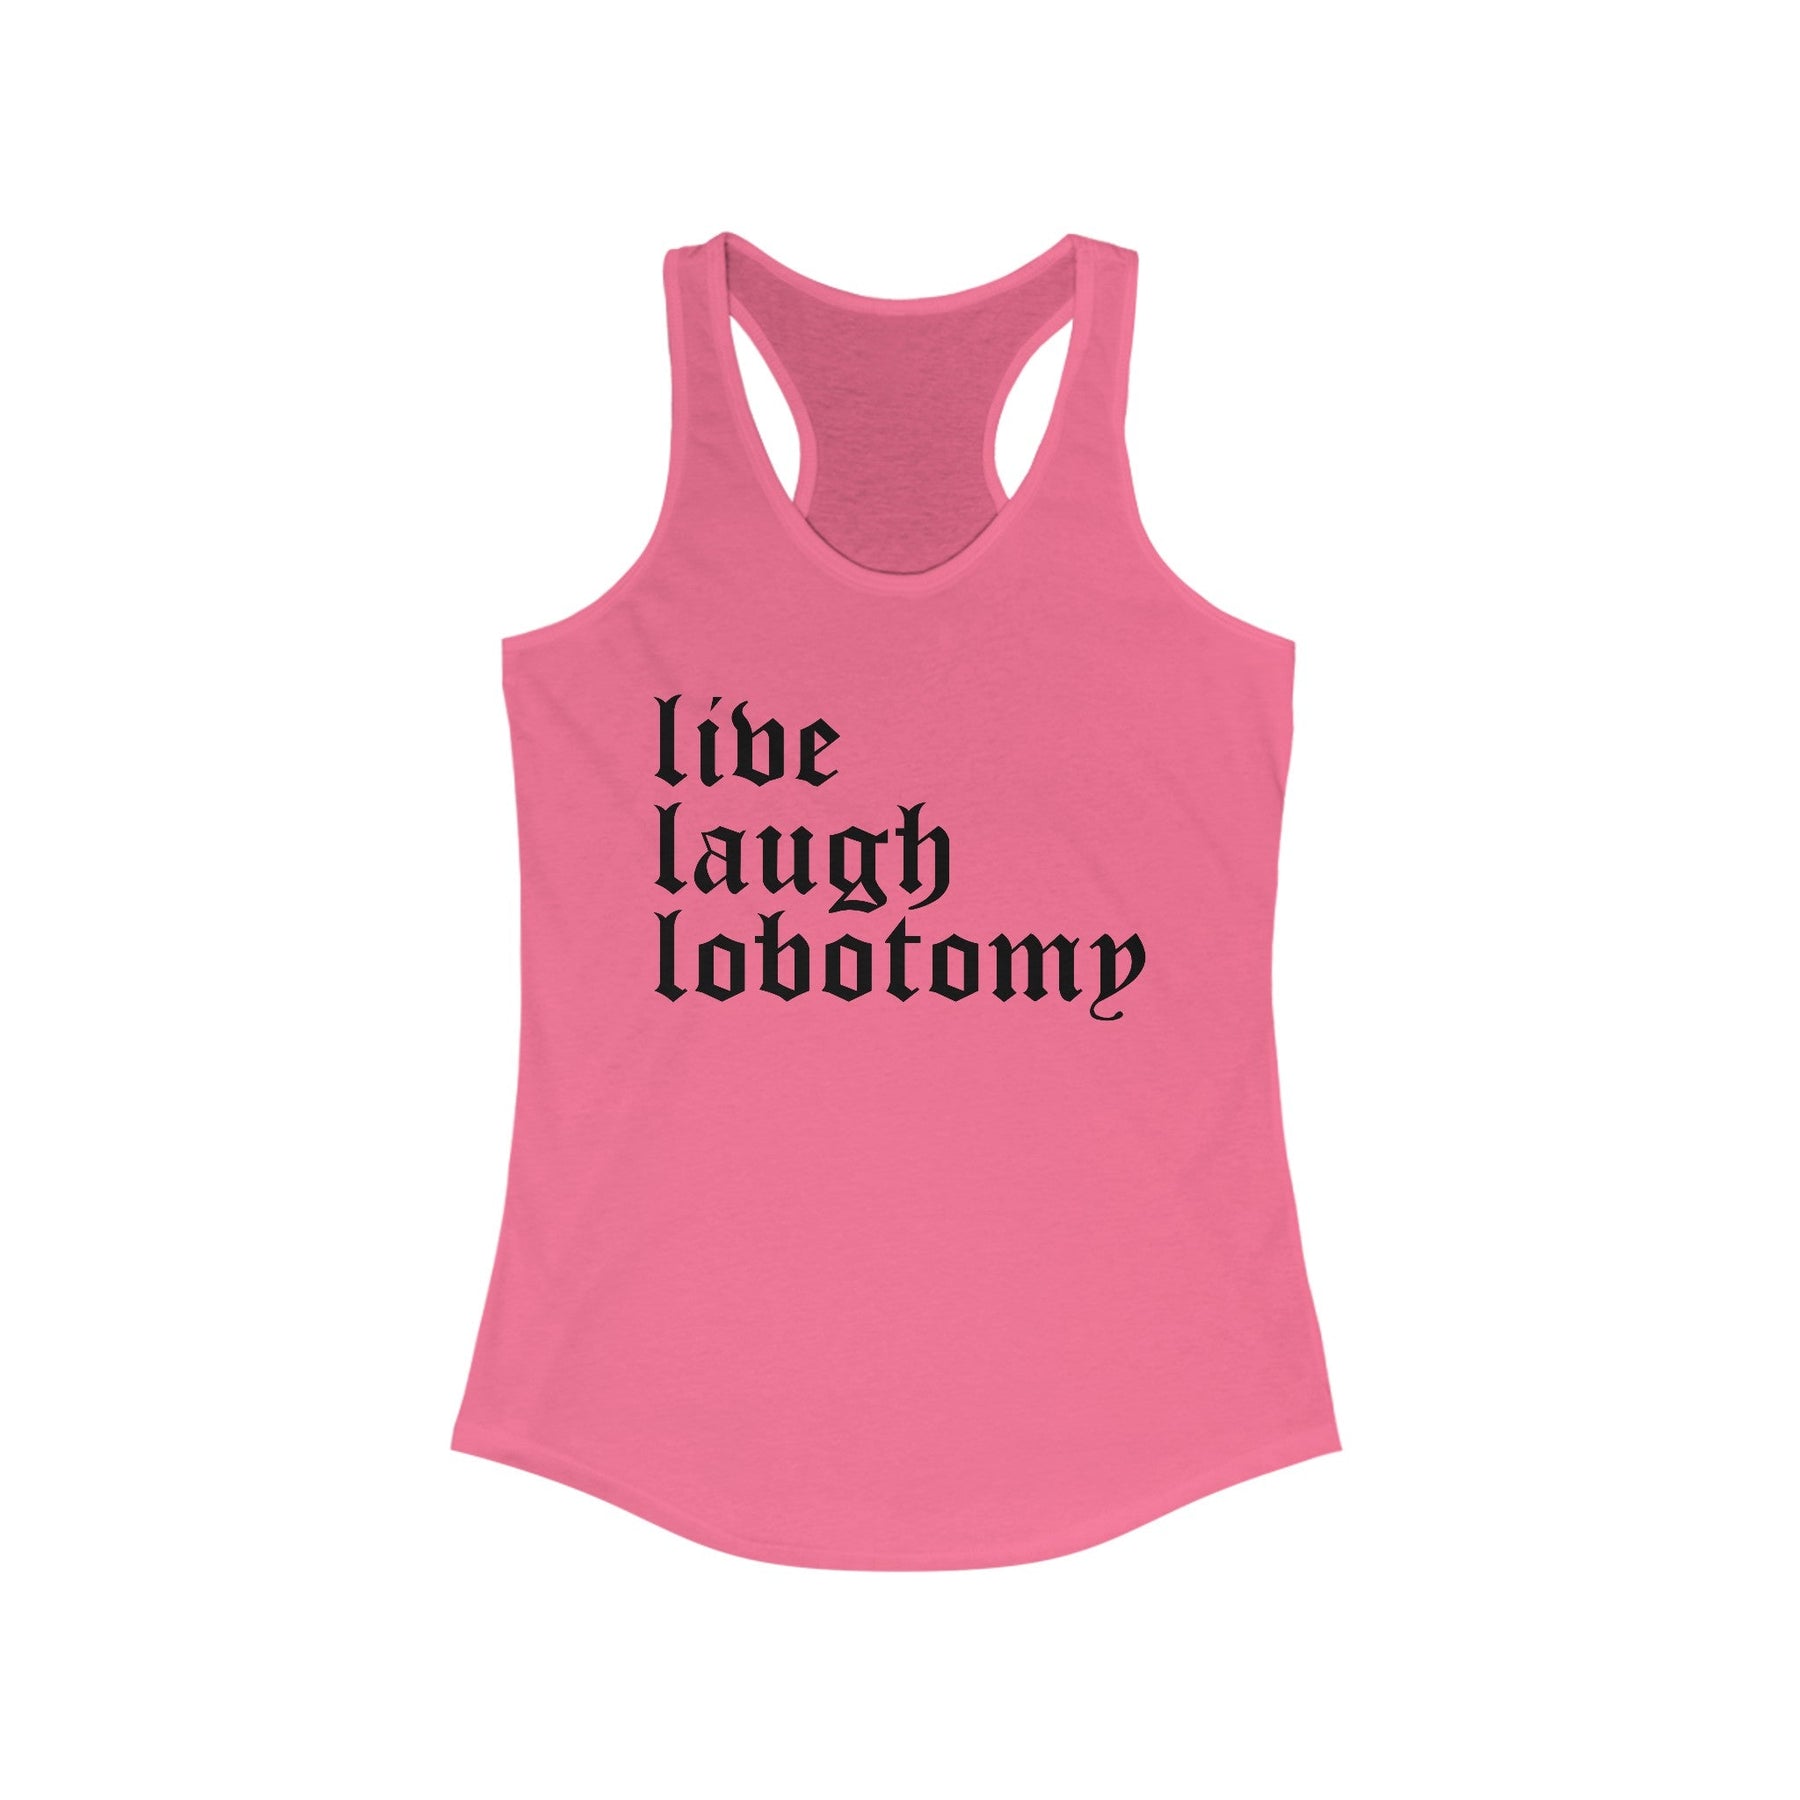 Live Laugh Lobotomy Women's Racerback Tank - Goth Cloth Co.Tank Top54841208111197328395